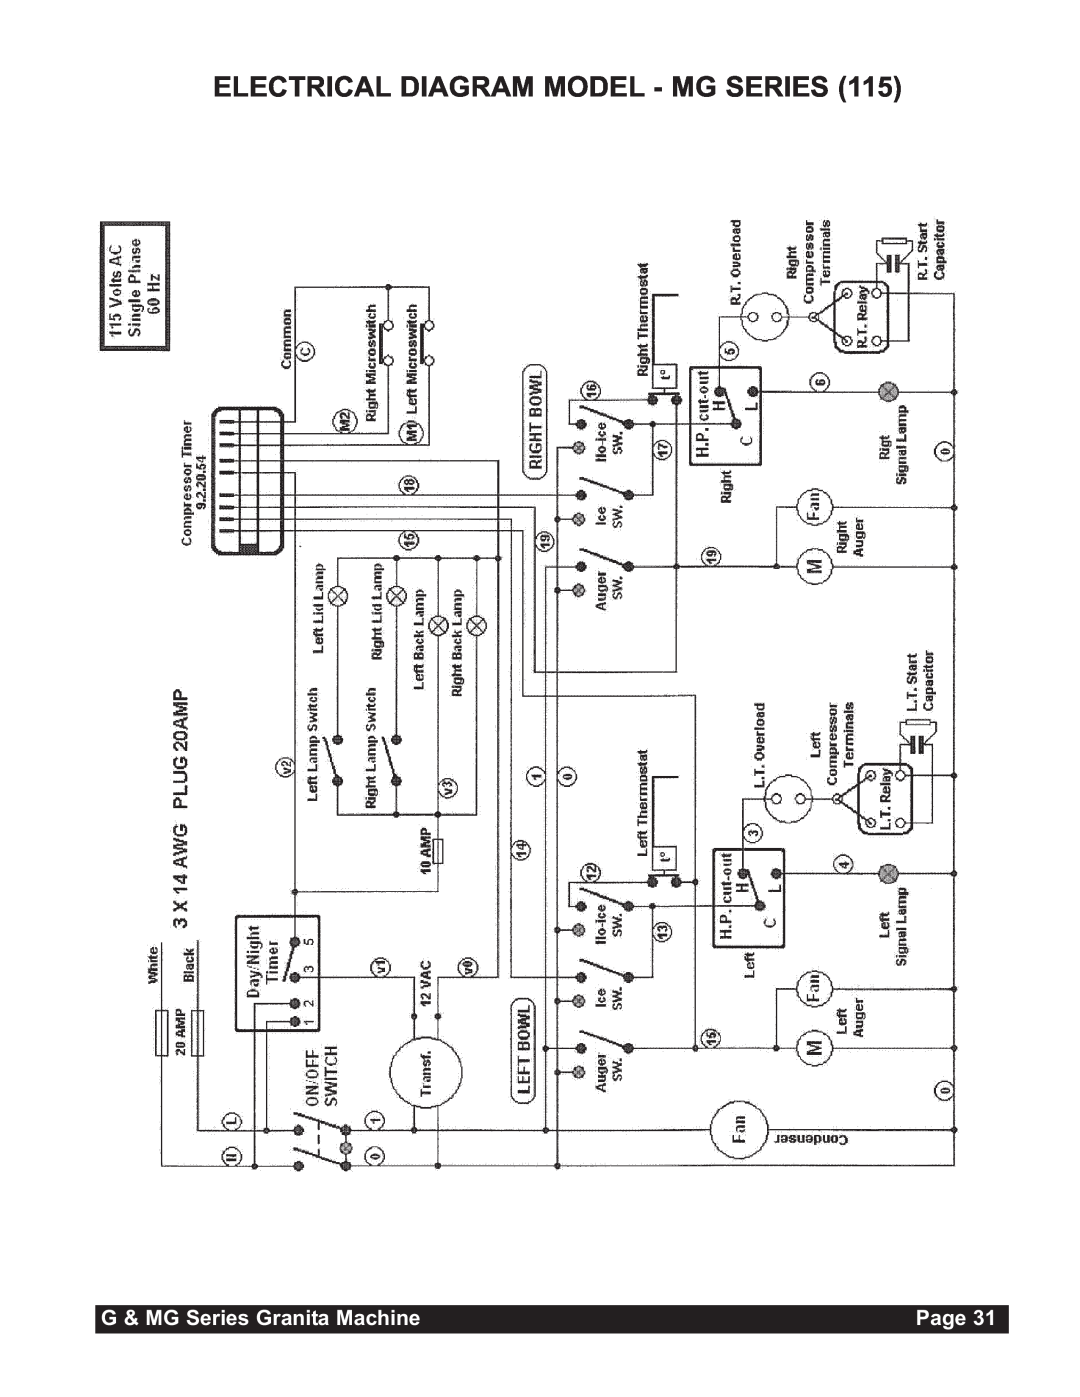 Grindmaster MG23-2B, MG236-2B, MG235-2B Electrical Diagram Model - Mg Series, G & MG Series Granita Machine, Page 